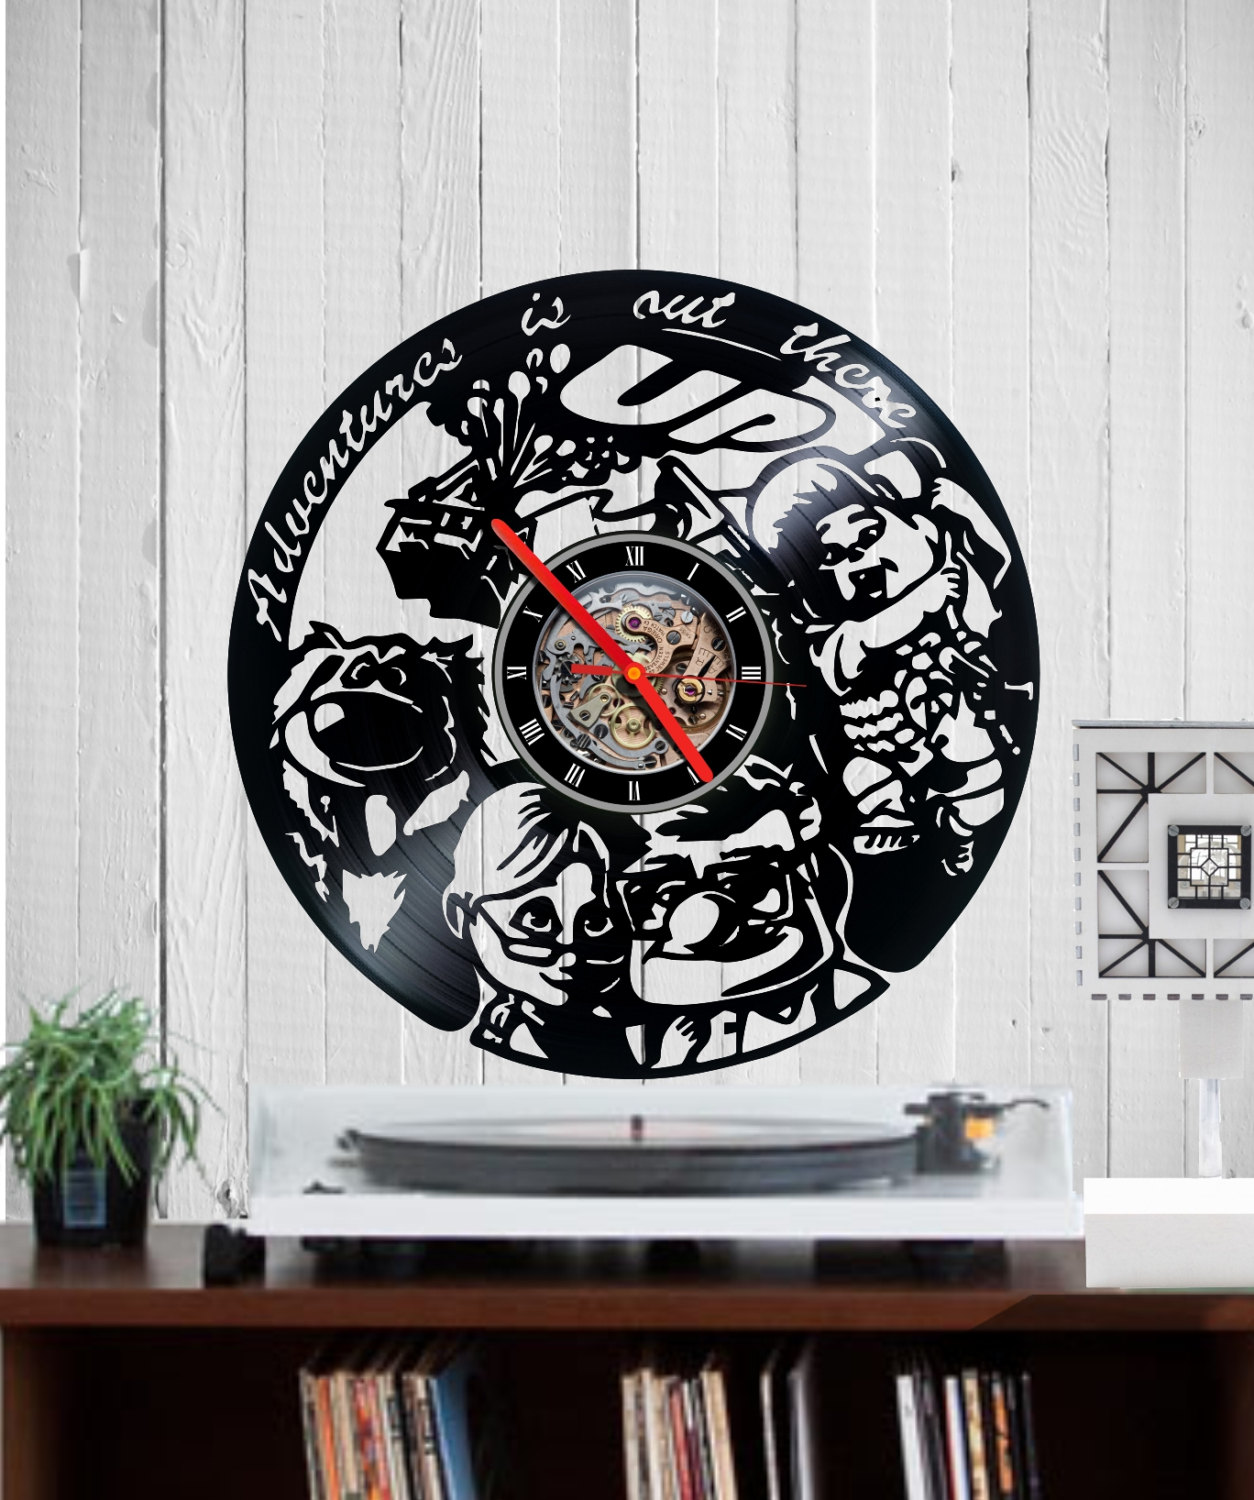 Details about   Vinyl Clock Oakland Raiders Vinyl Record Clock Handmade Original Gift 5699